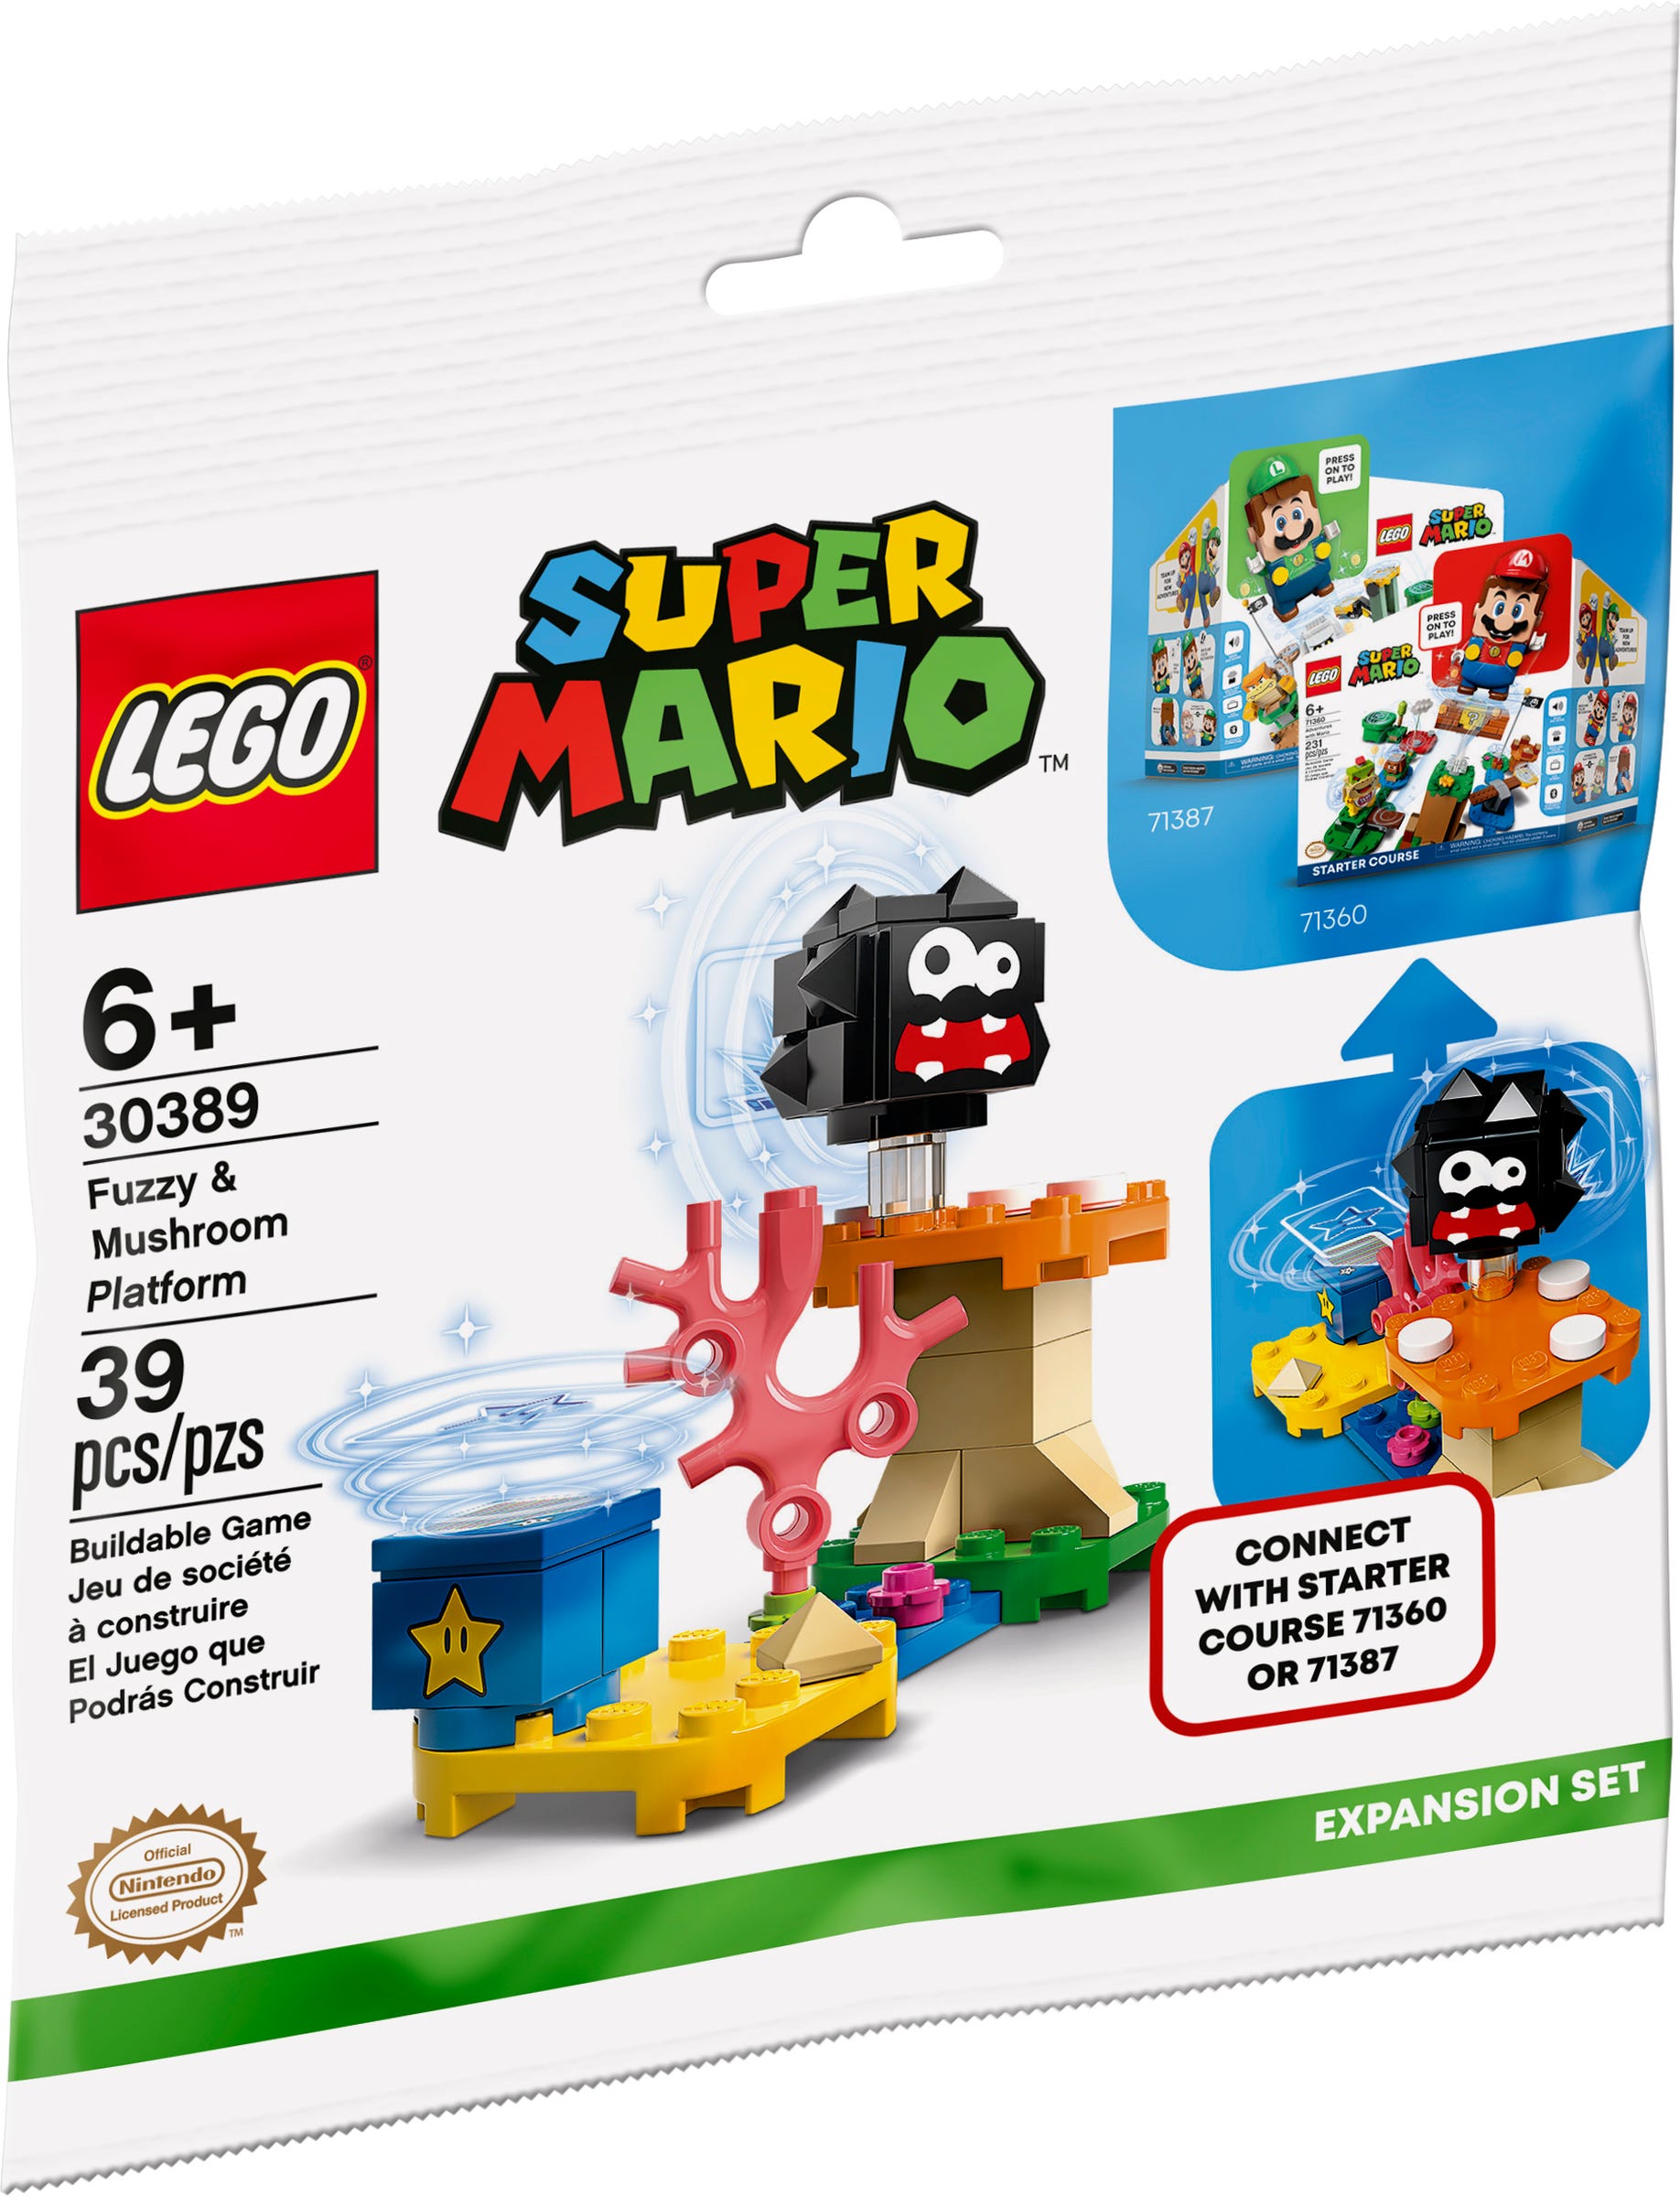 Fuzzy & Mushroom Platform (30389) | LEGO Super Mario Wiki | Fandom